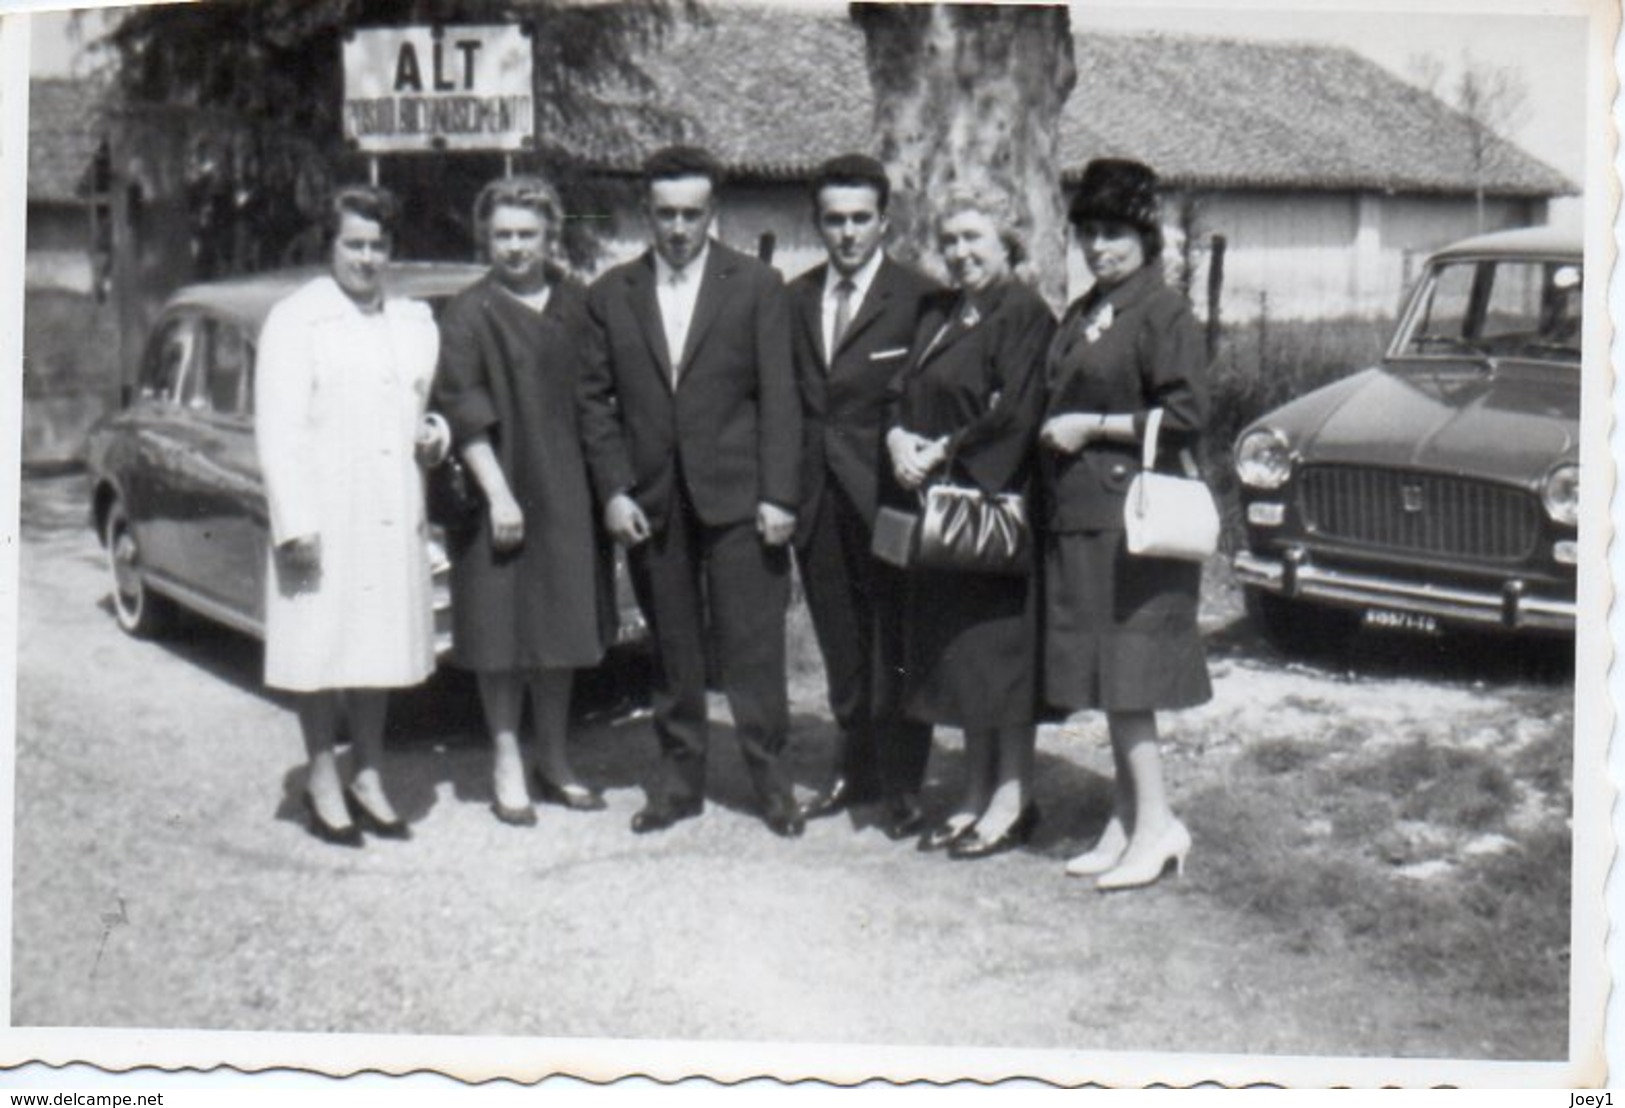 Photo Famille,années 60 - Anonyme Personen